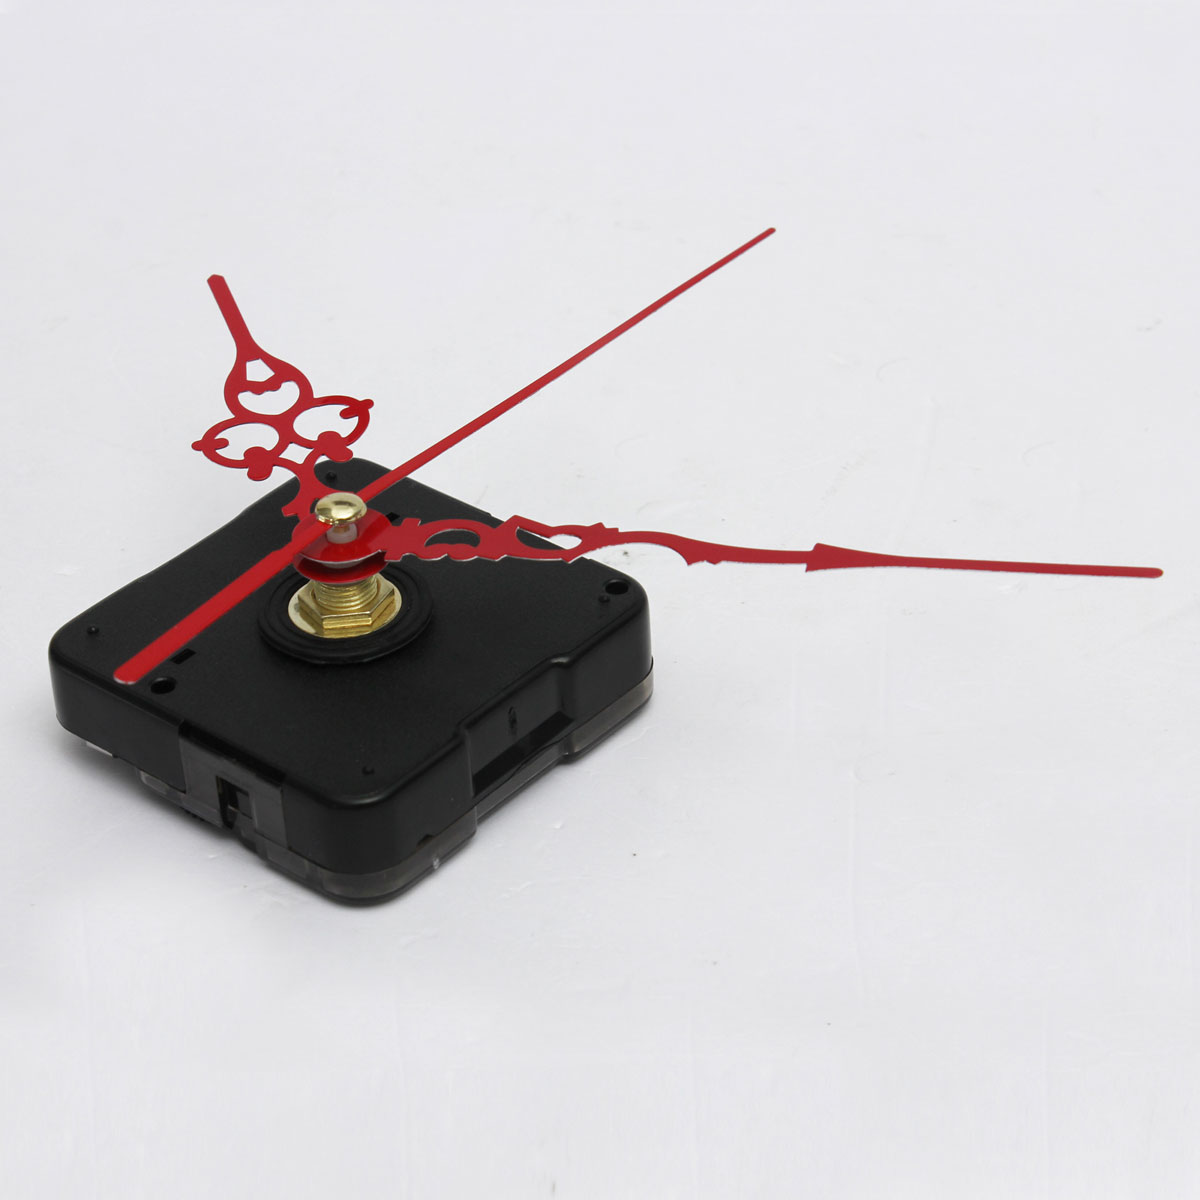 Kit-Quartz-Clock-Movement-Spindle-Mechanism-Parts-Tool-Set-with-Red-Hands-DIY-1338649